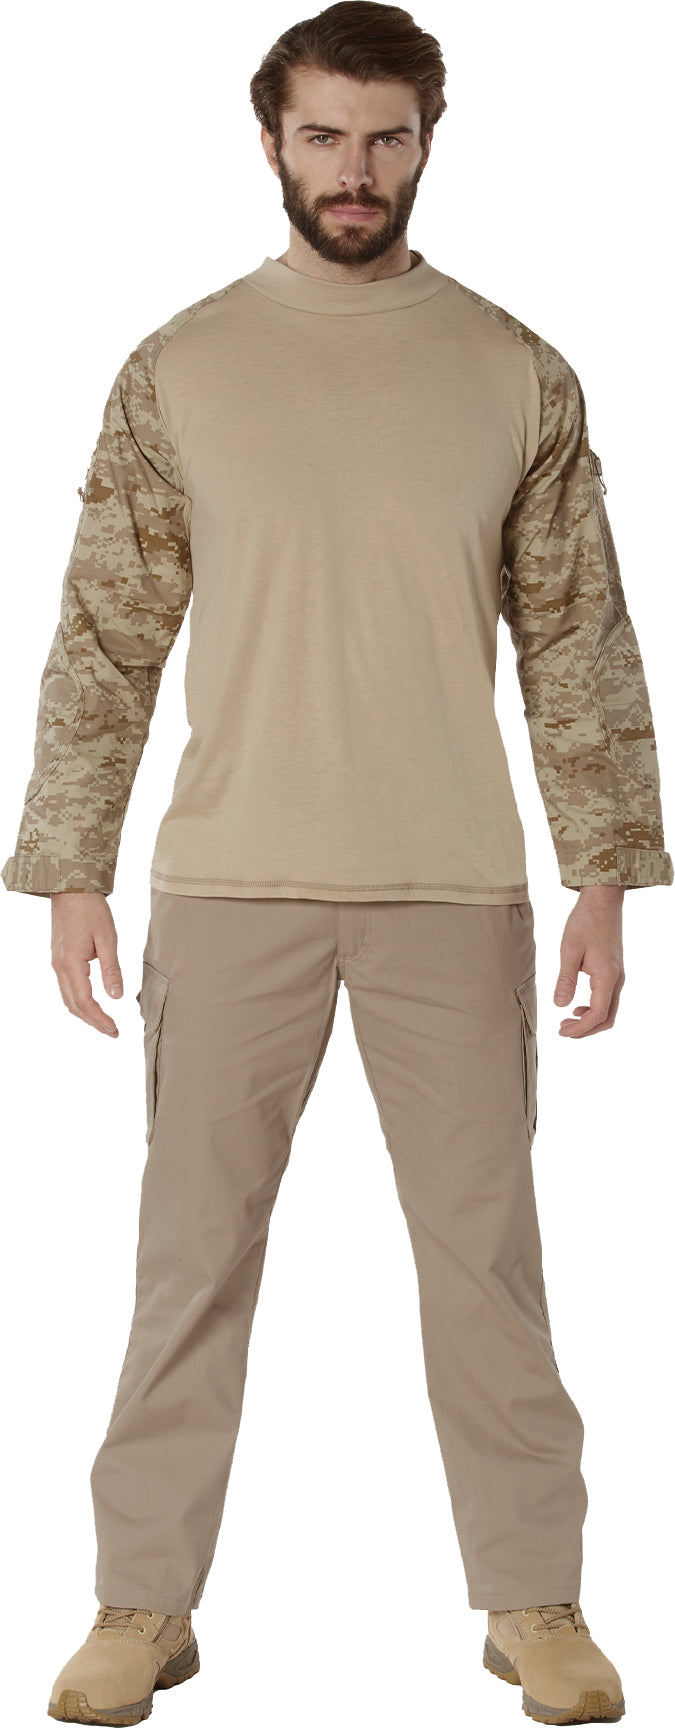 Airsoft Men's GEN3 Tactical Shirt Military Army Combat Camo Long Sleeve  Shirts 